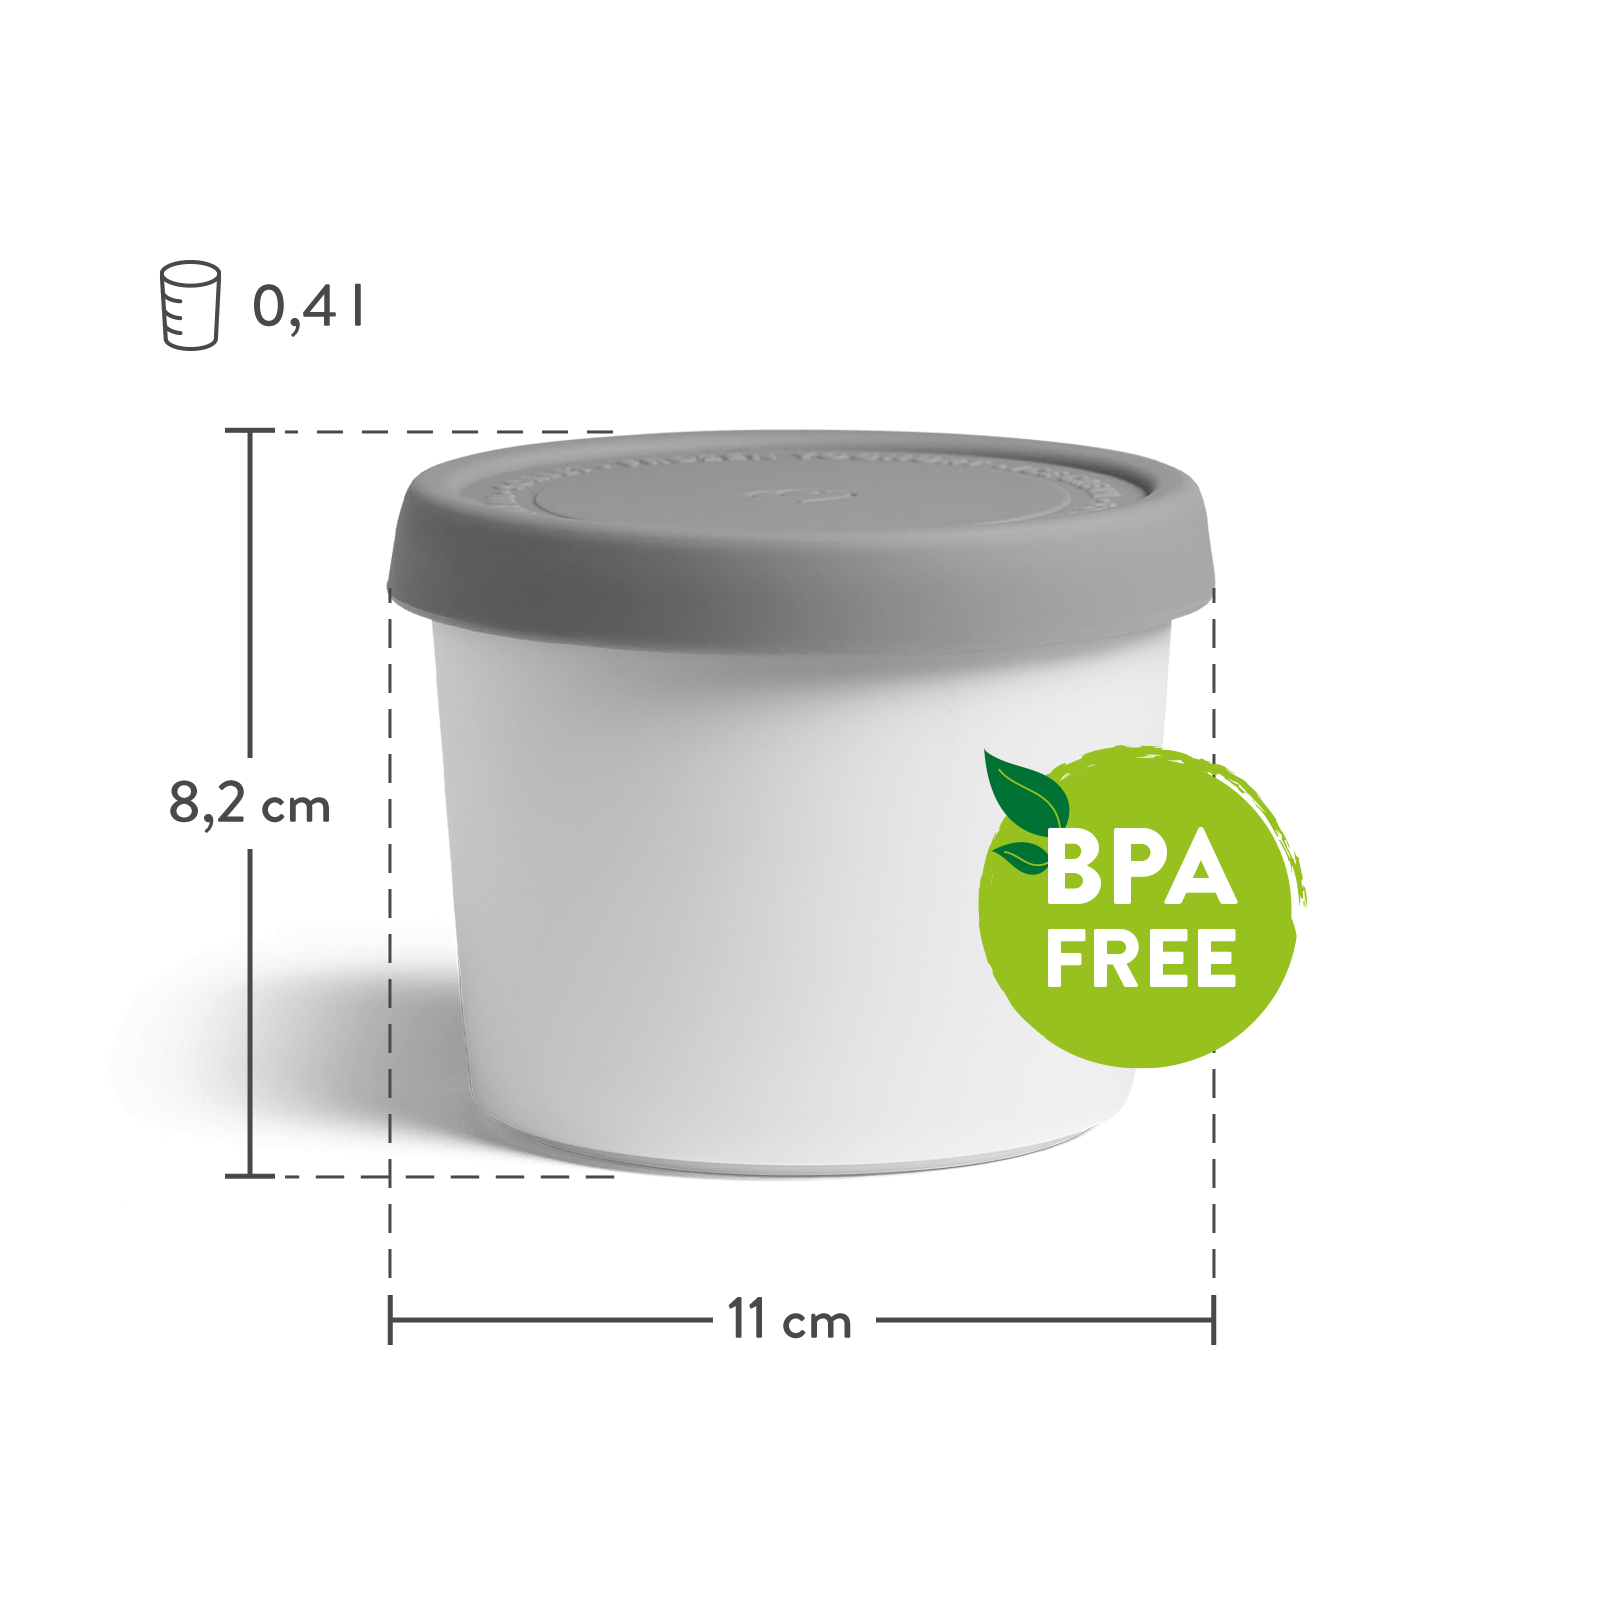 4er-Set Eisbehälter 400 ml,  8,2 x 11 cm, BPA-frei - Grau/Weiß